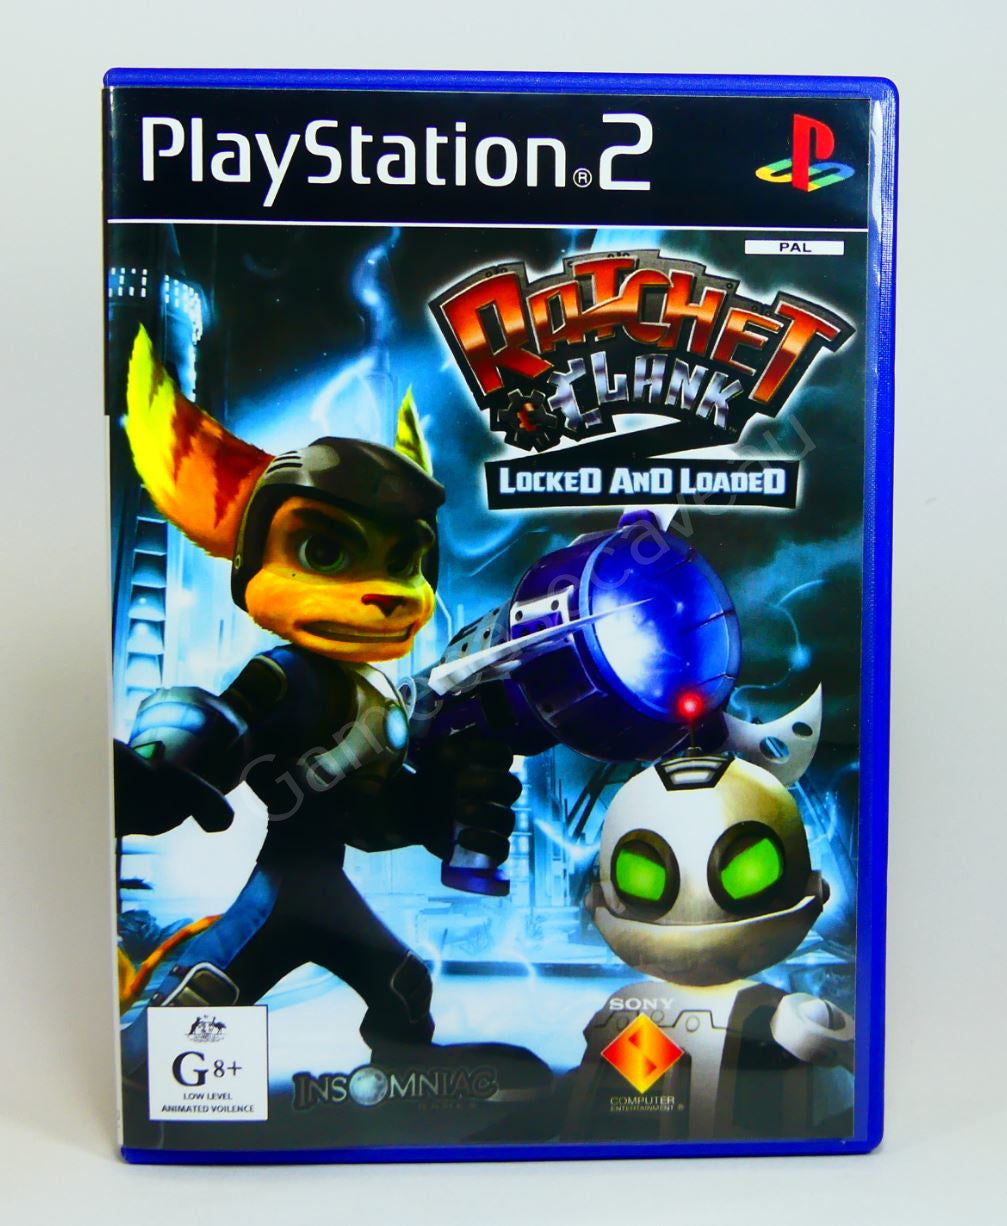 Ratchet & Clank (PS2)